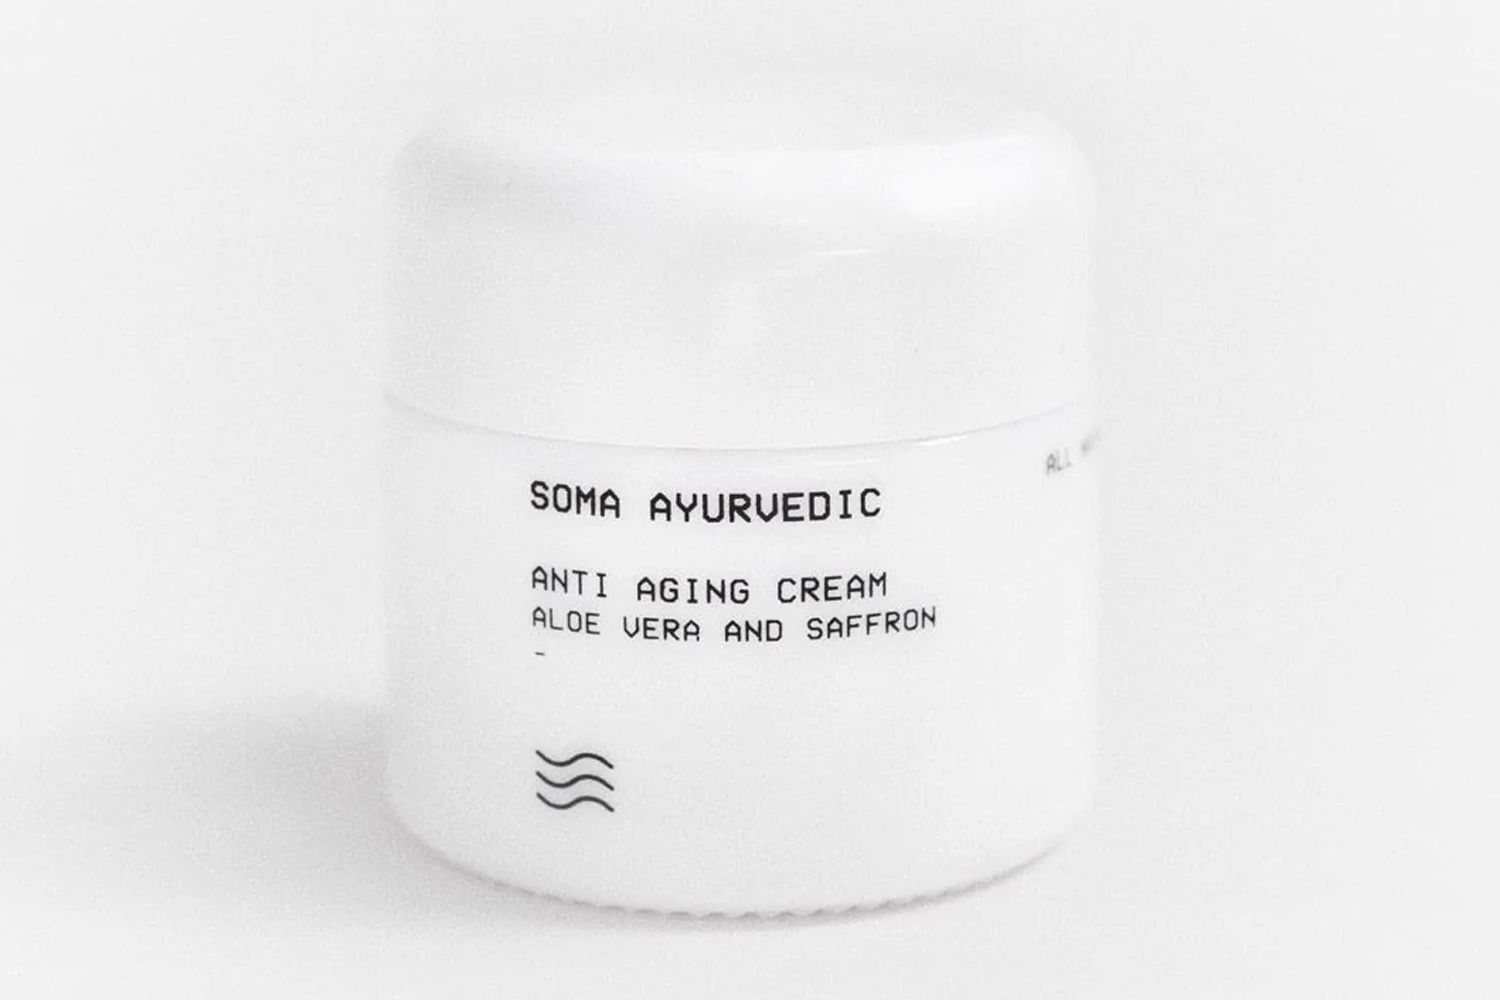 Soma Ayurvedic Anti-Aging Cream